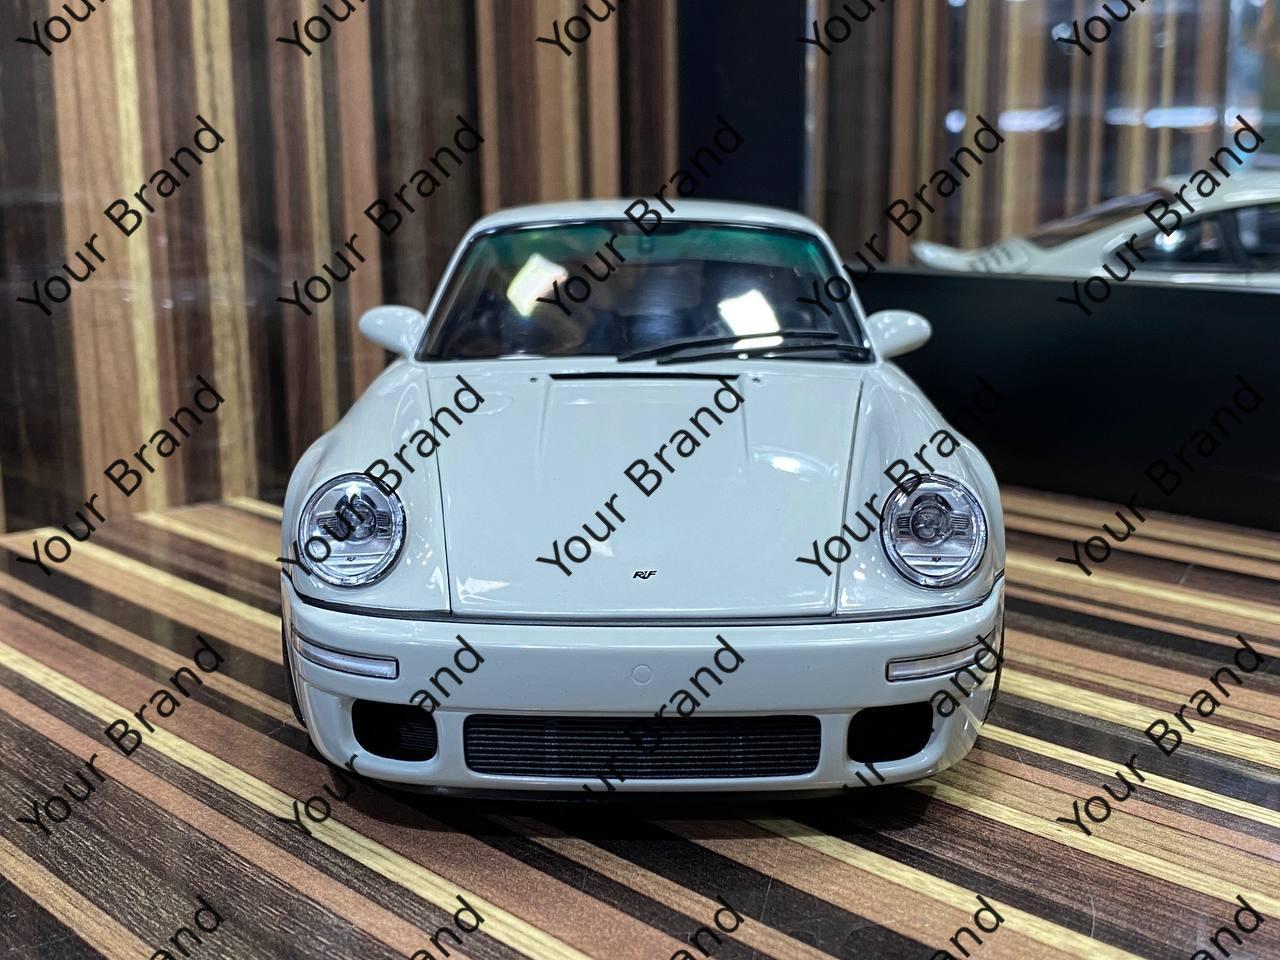 1/18 Diecast  Porsche RUF SCR Chalk Grey Almost Real Scale Model Car - Diecast model car by dturman.com - Almost Real|Sold in Dturman.com Dubai UAE.